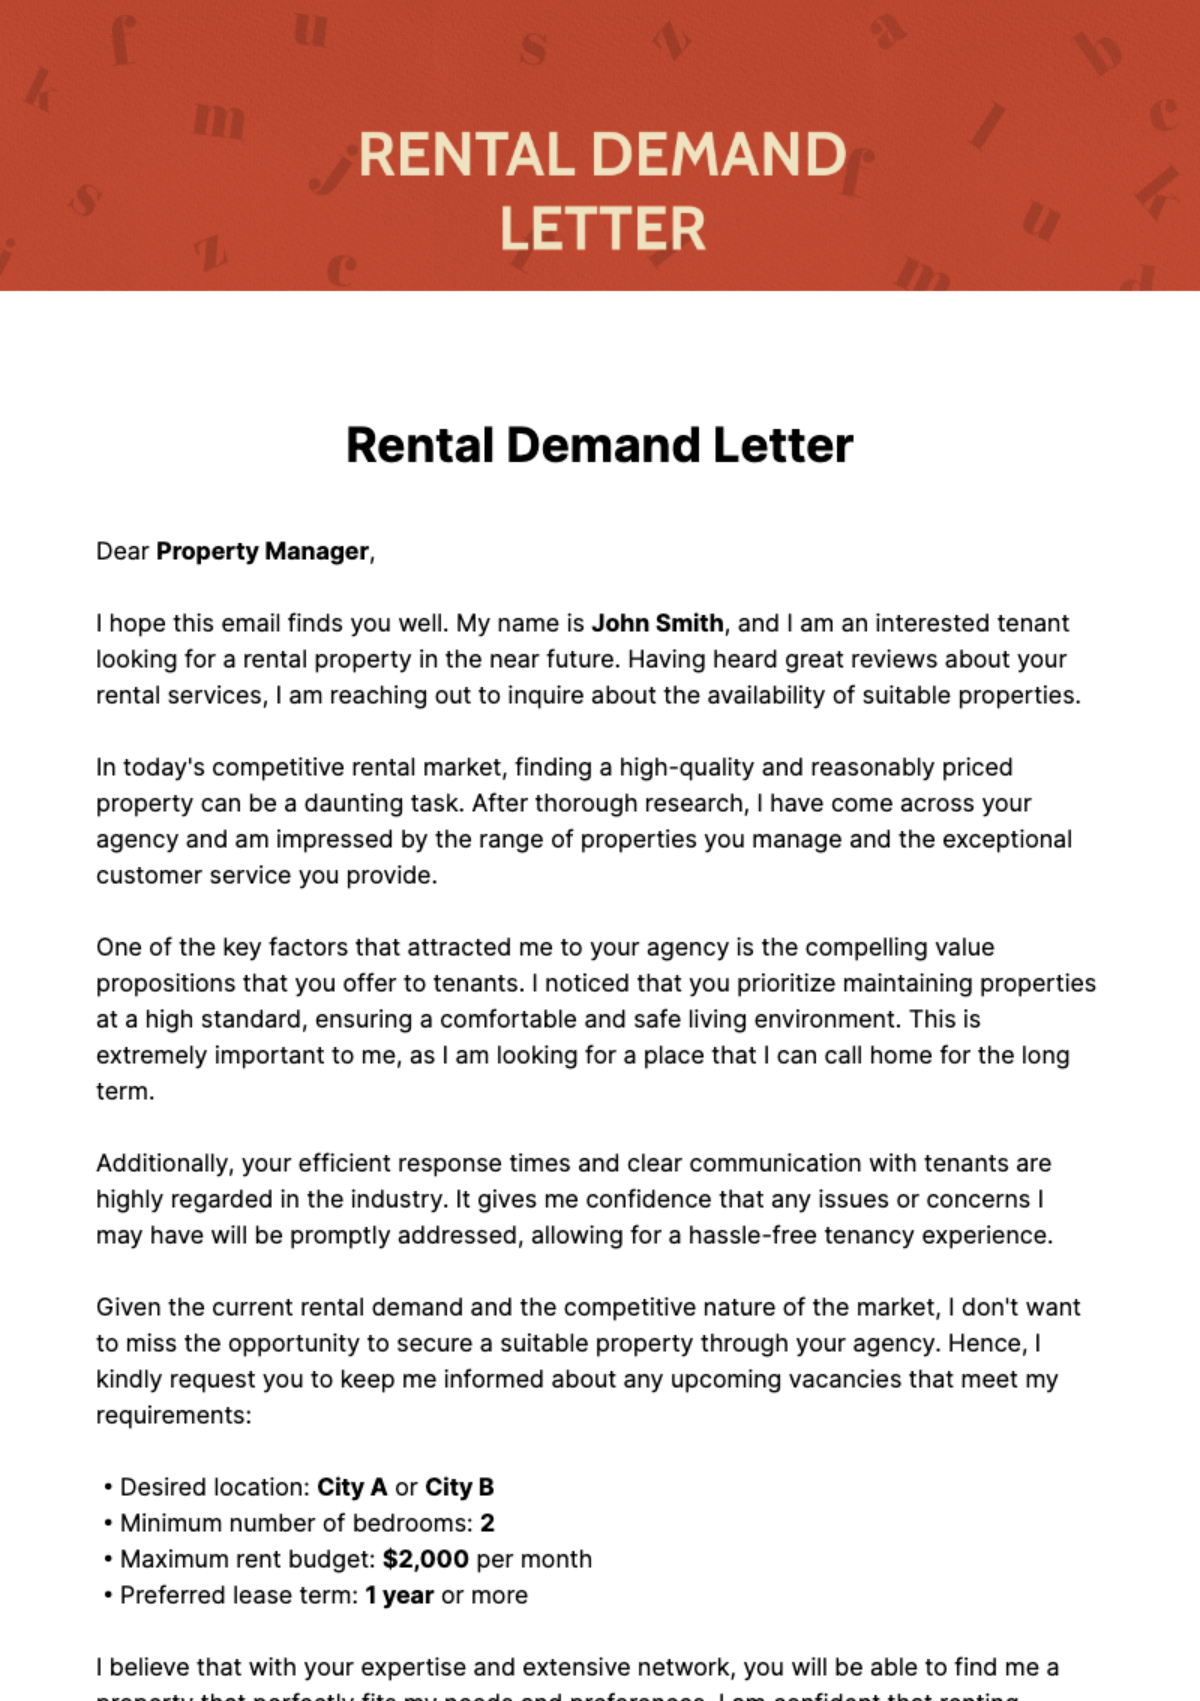 Rental Demand Letter Template